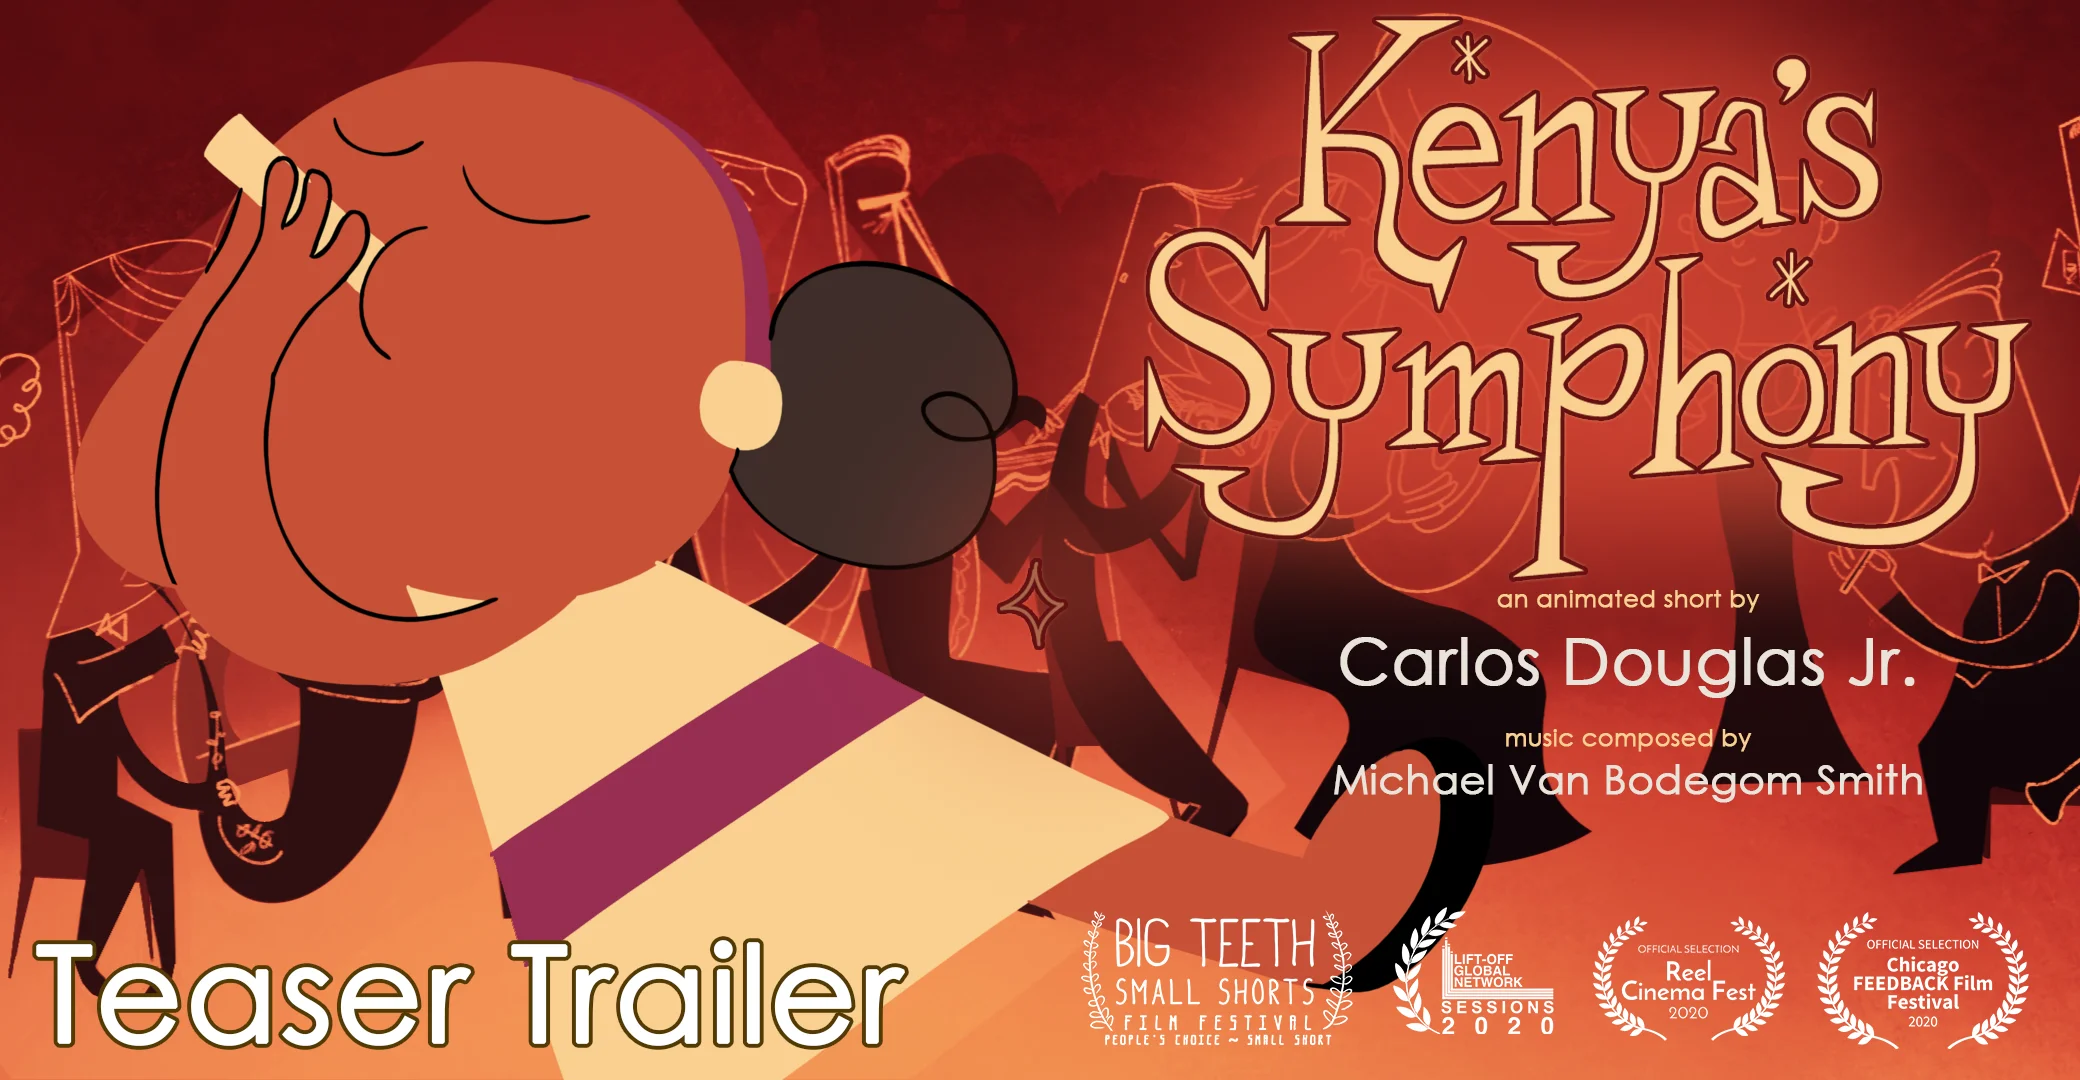 KENYA'S SYMPHONY - Official Teaser Trailer on Vimeo